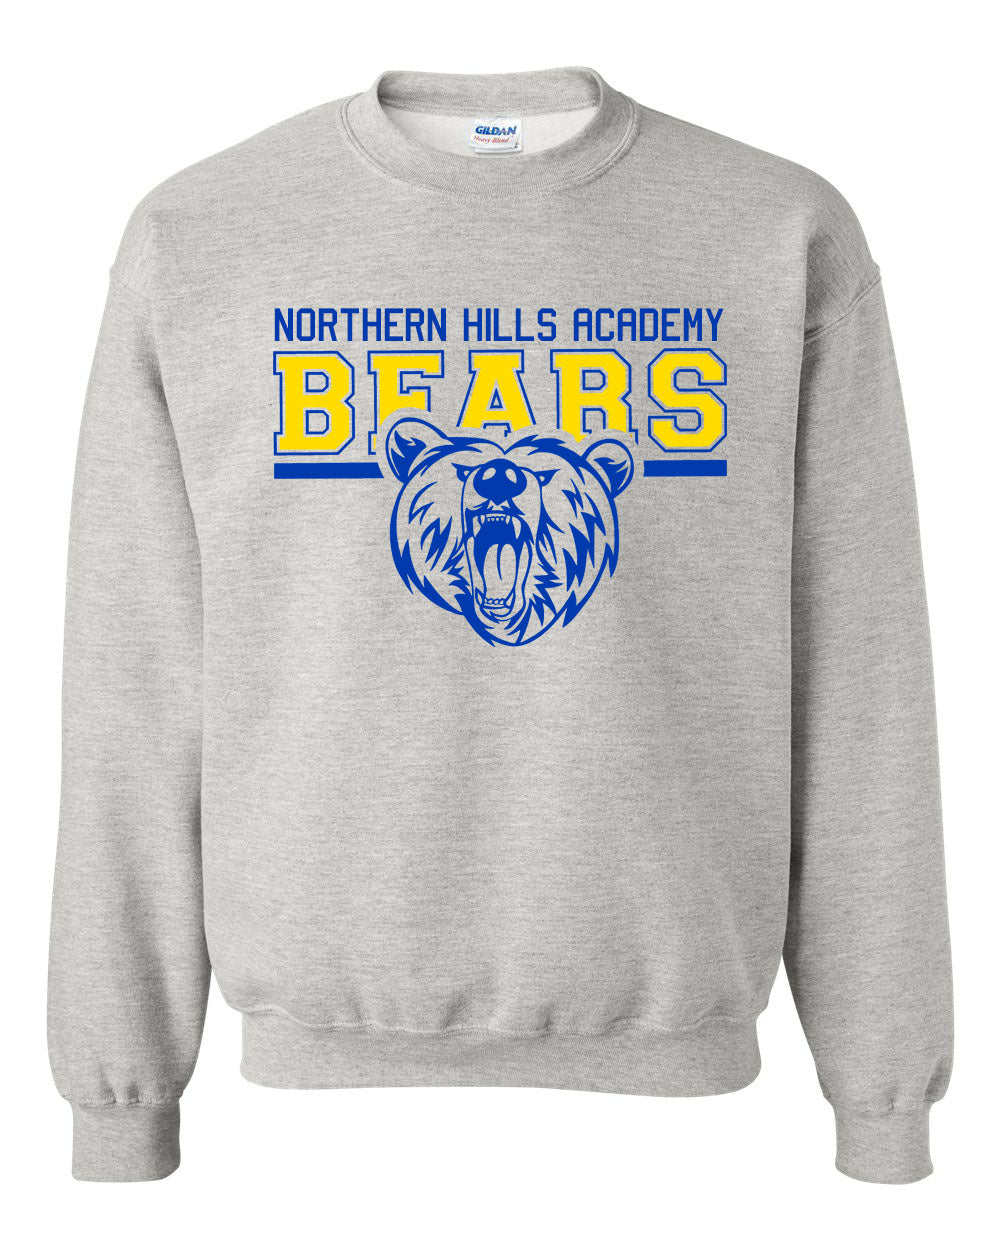 NH Bears non hooded sweatshirt